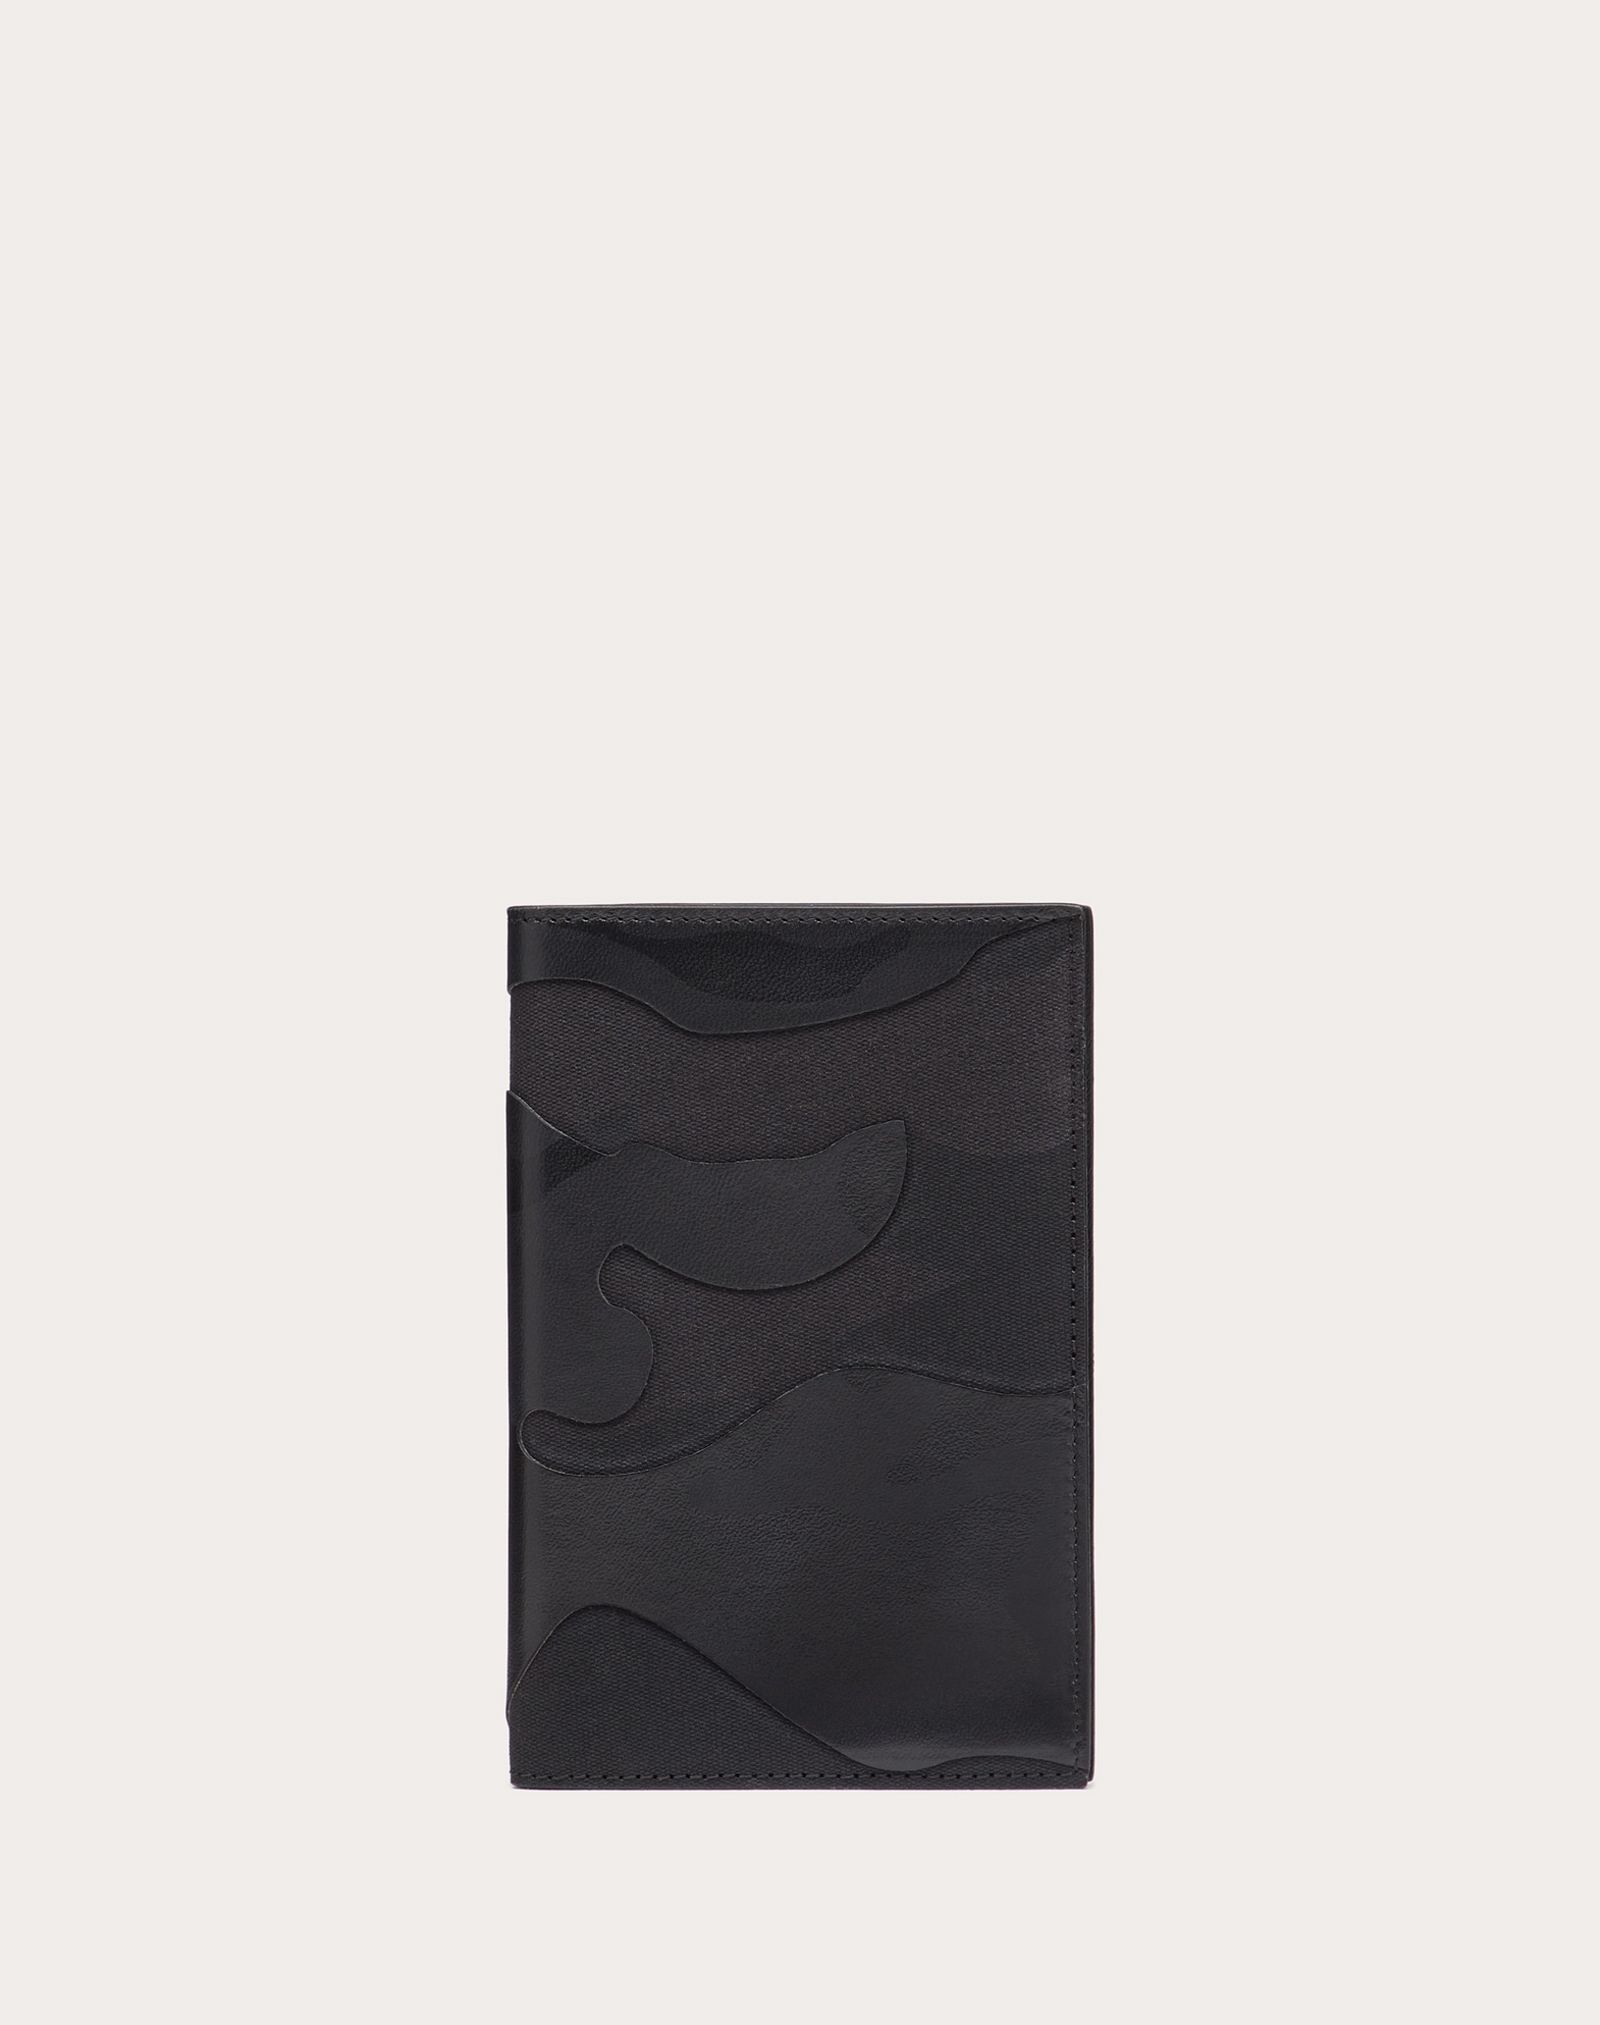 Camouflage Noir Passport Cover - 1